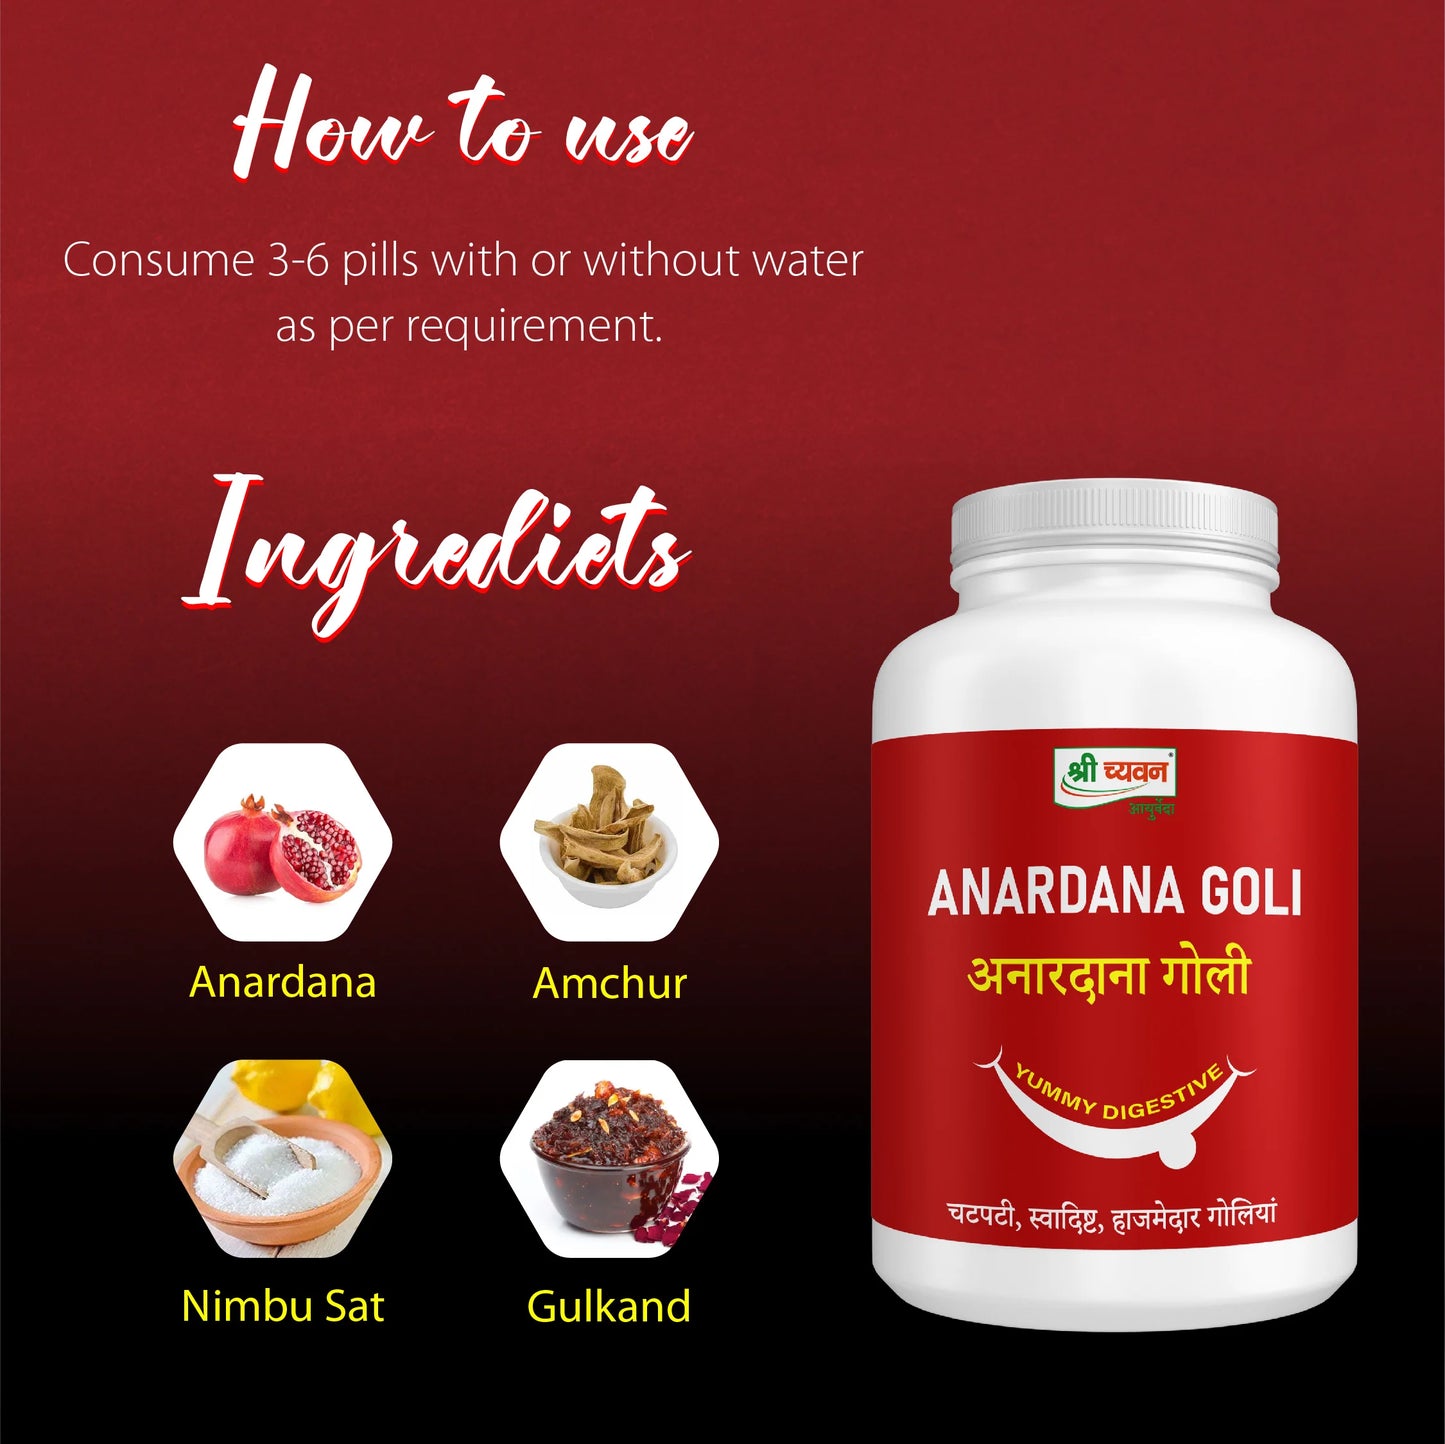 Anardana Goli for respiratory health